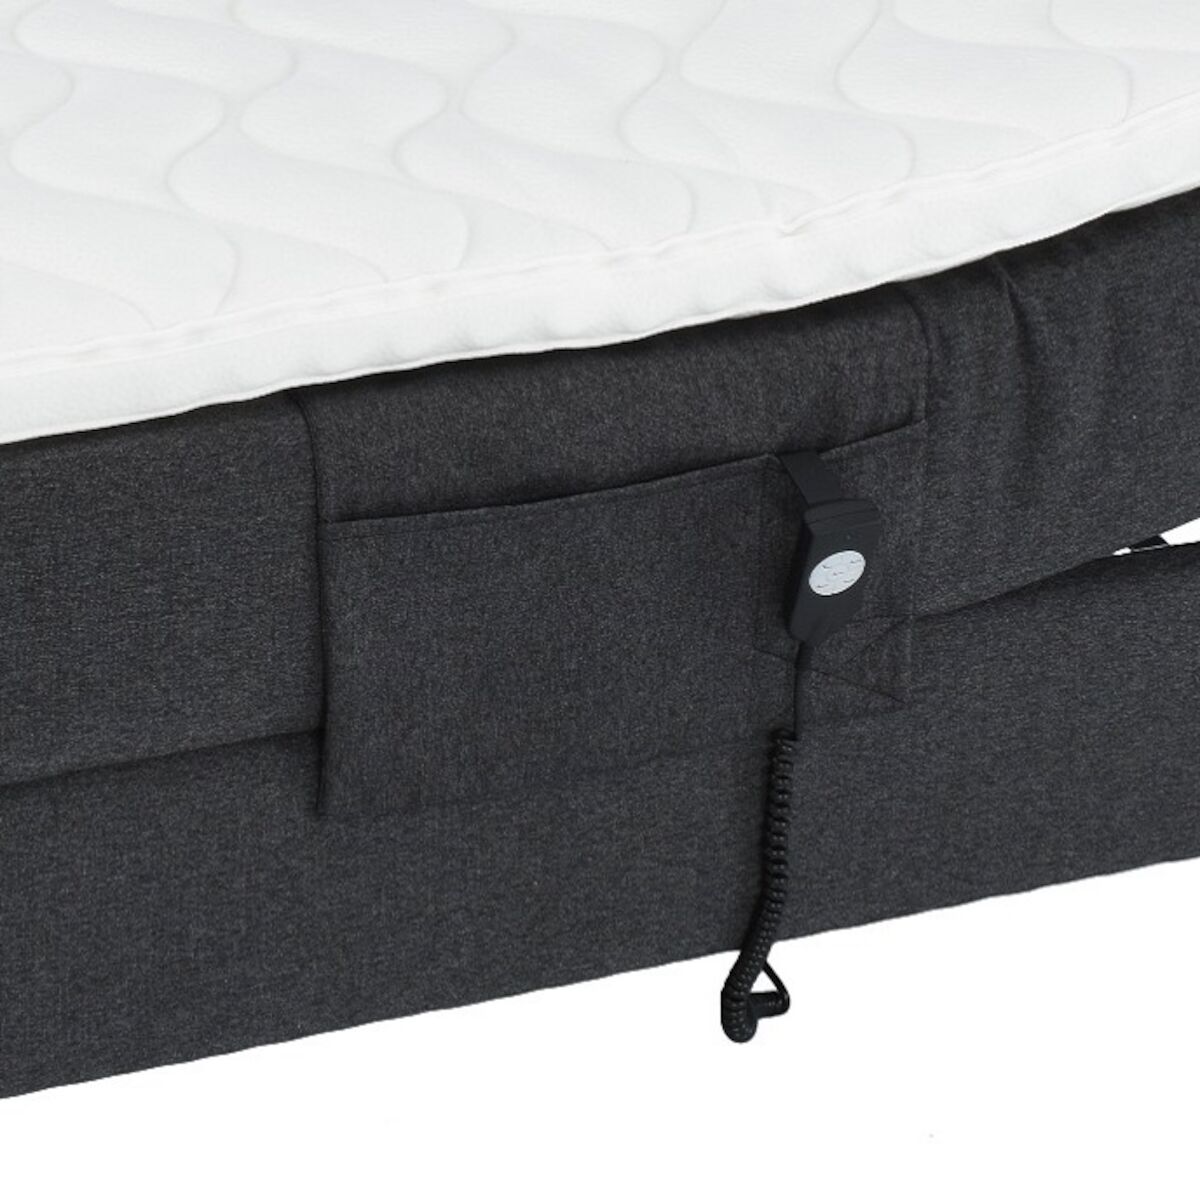 Unia tarviketasku 80/90 cm sängylle (136x38cm) tummanharmaa Fame 140 kangas